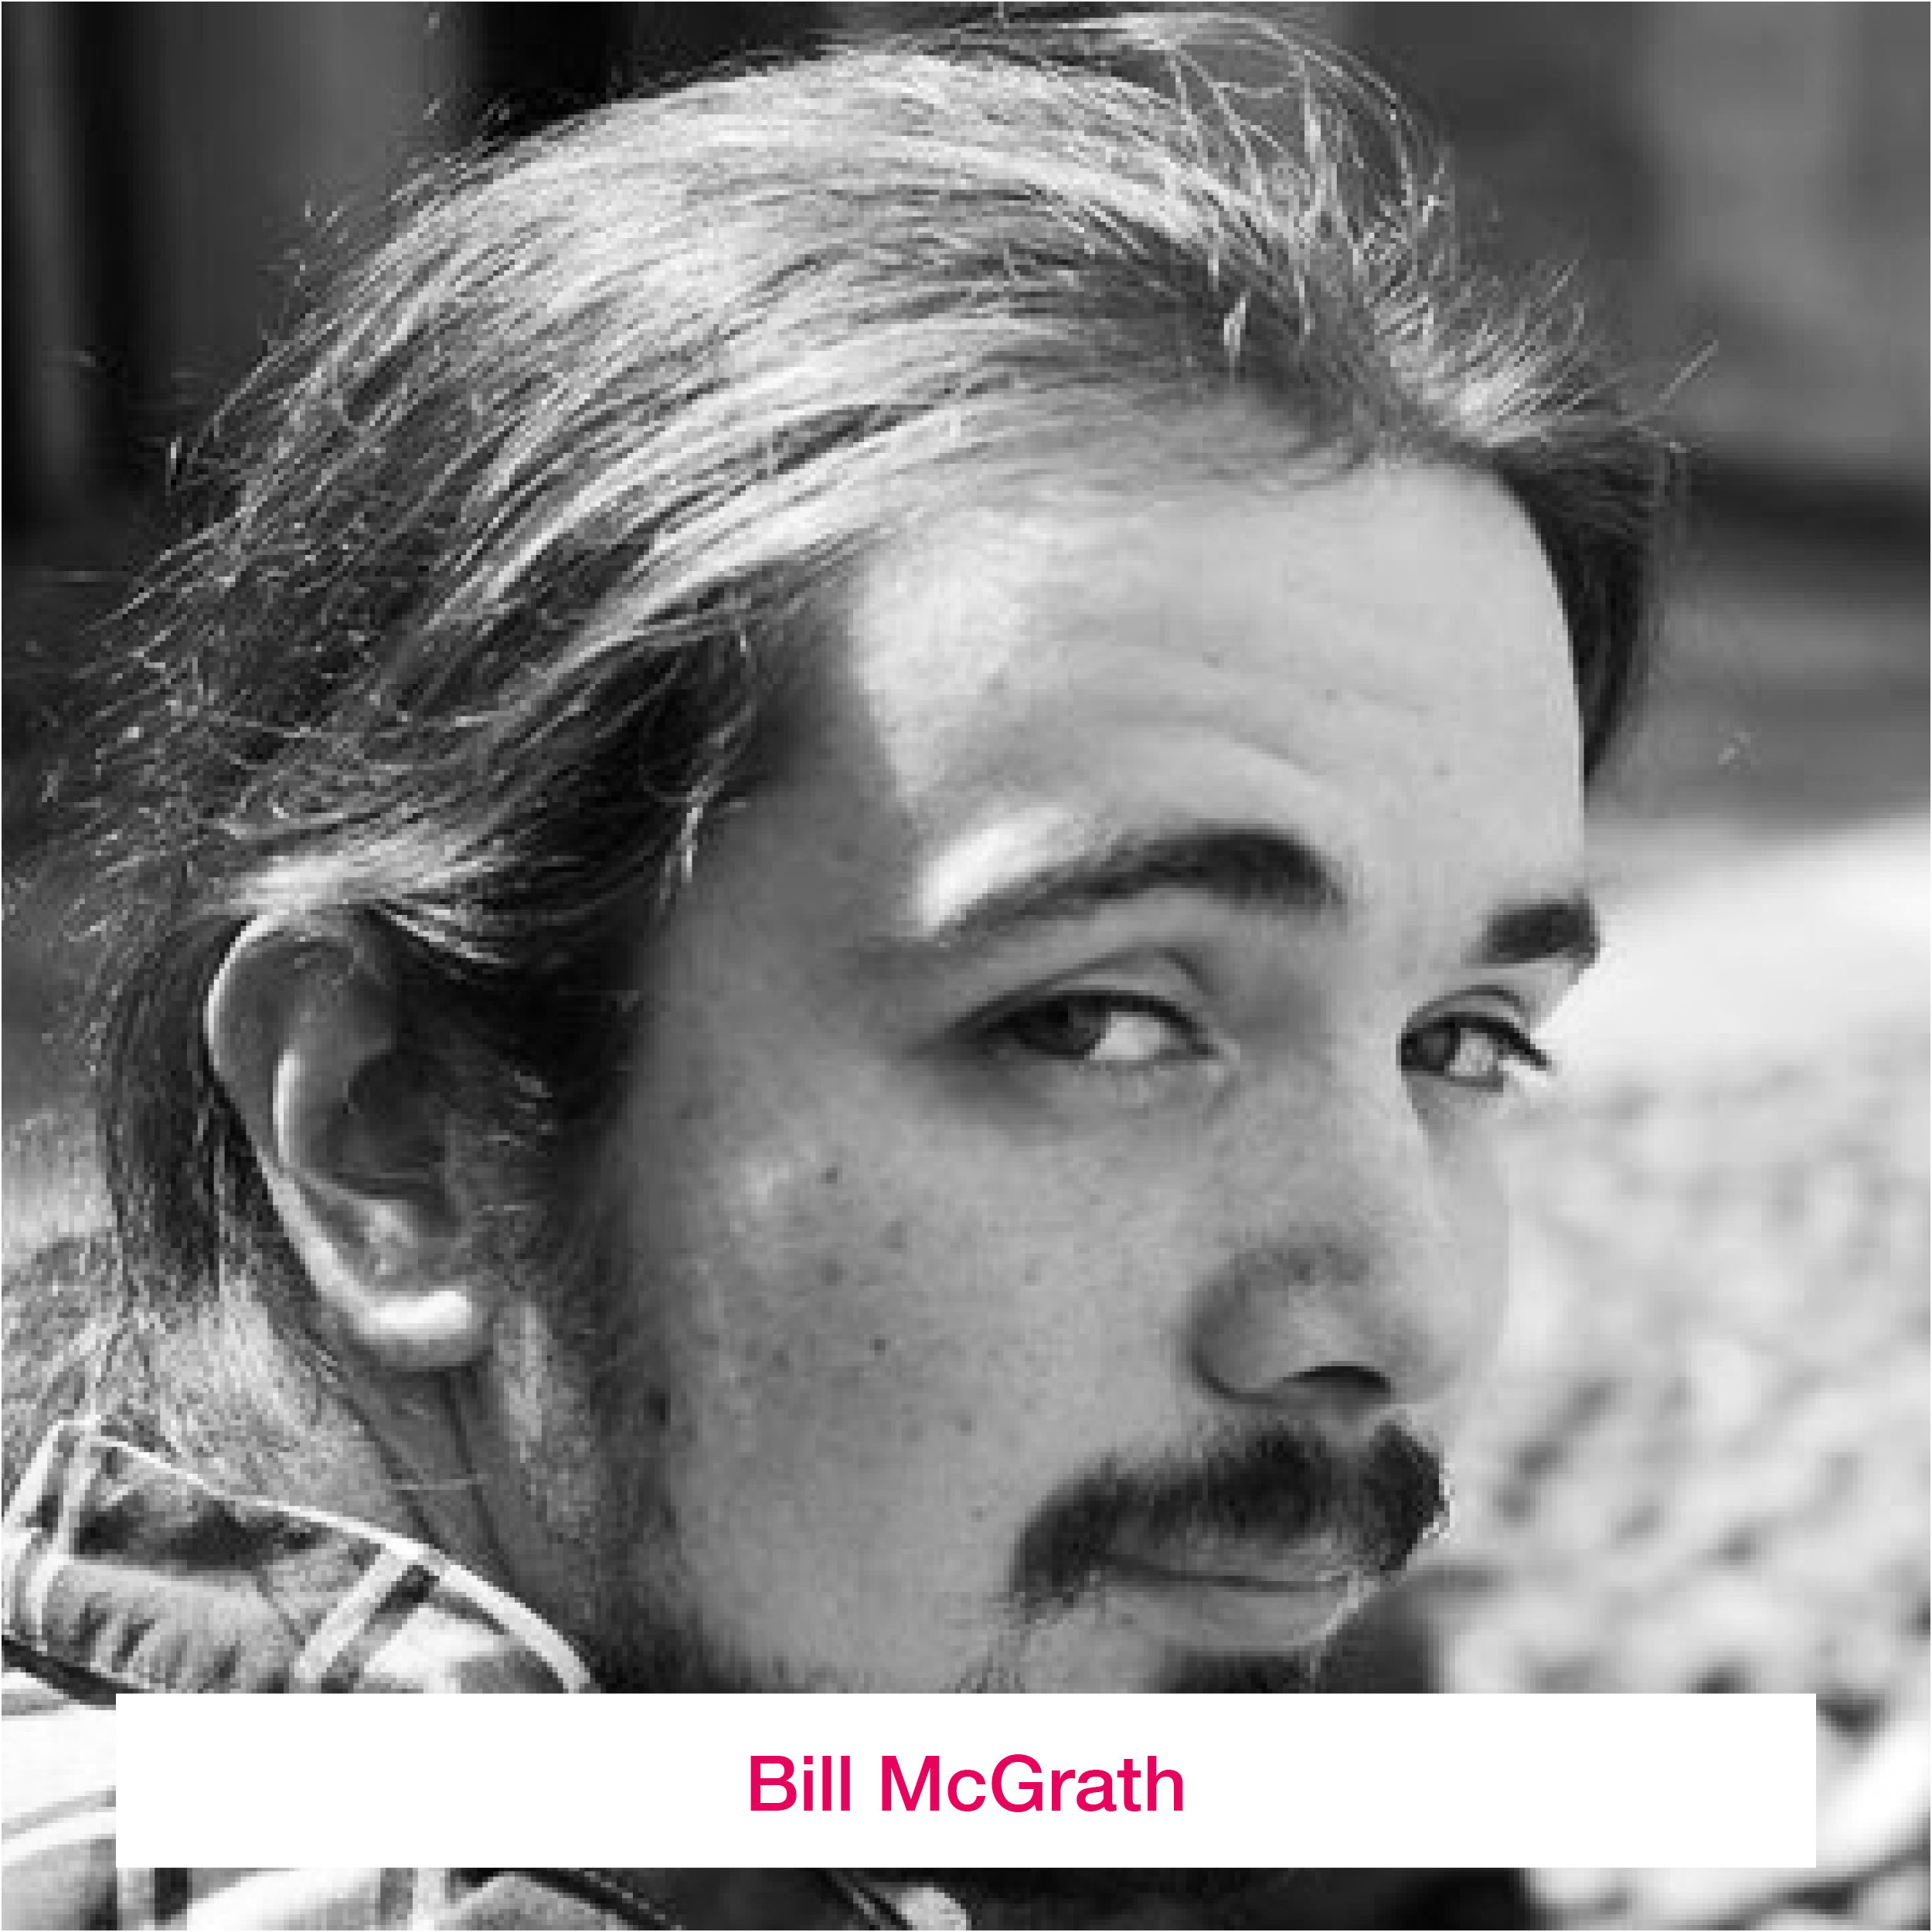 Bill McGrath